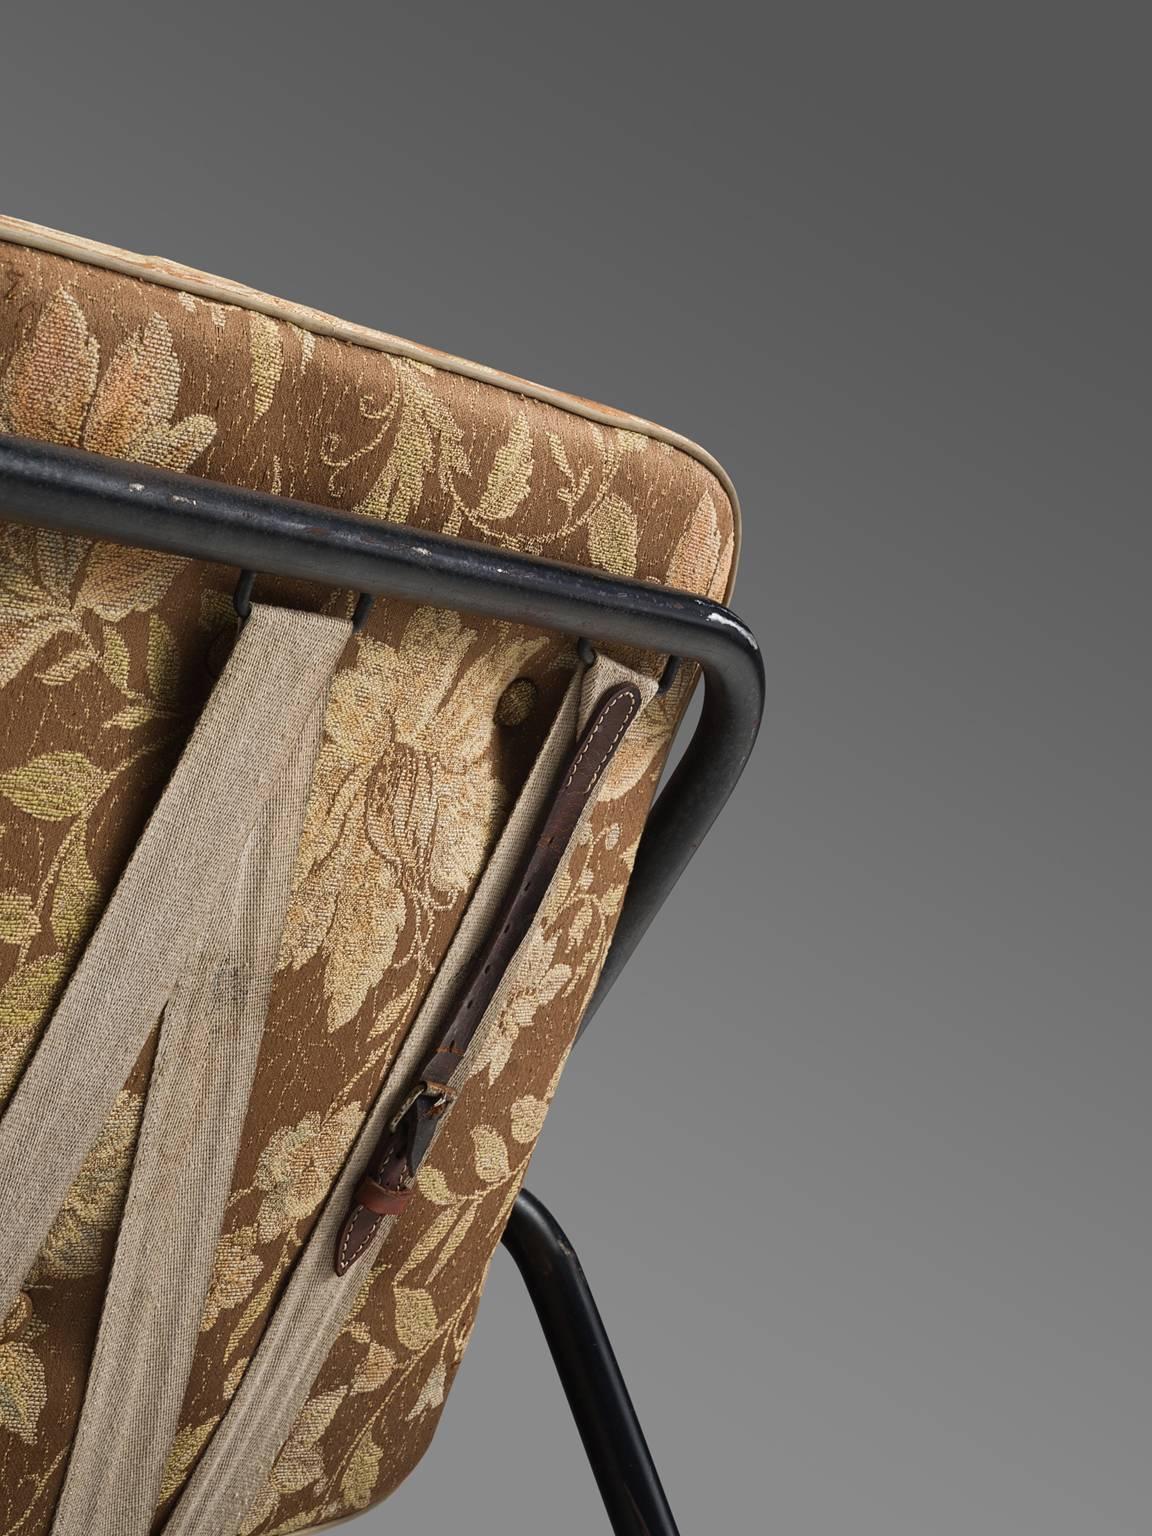 Hans Wegner GE215 Sawbuck Lounge Chair in Floral Upholstery 1